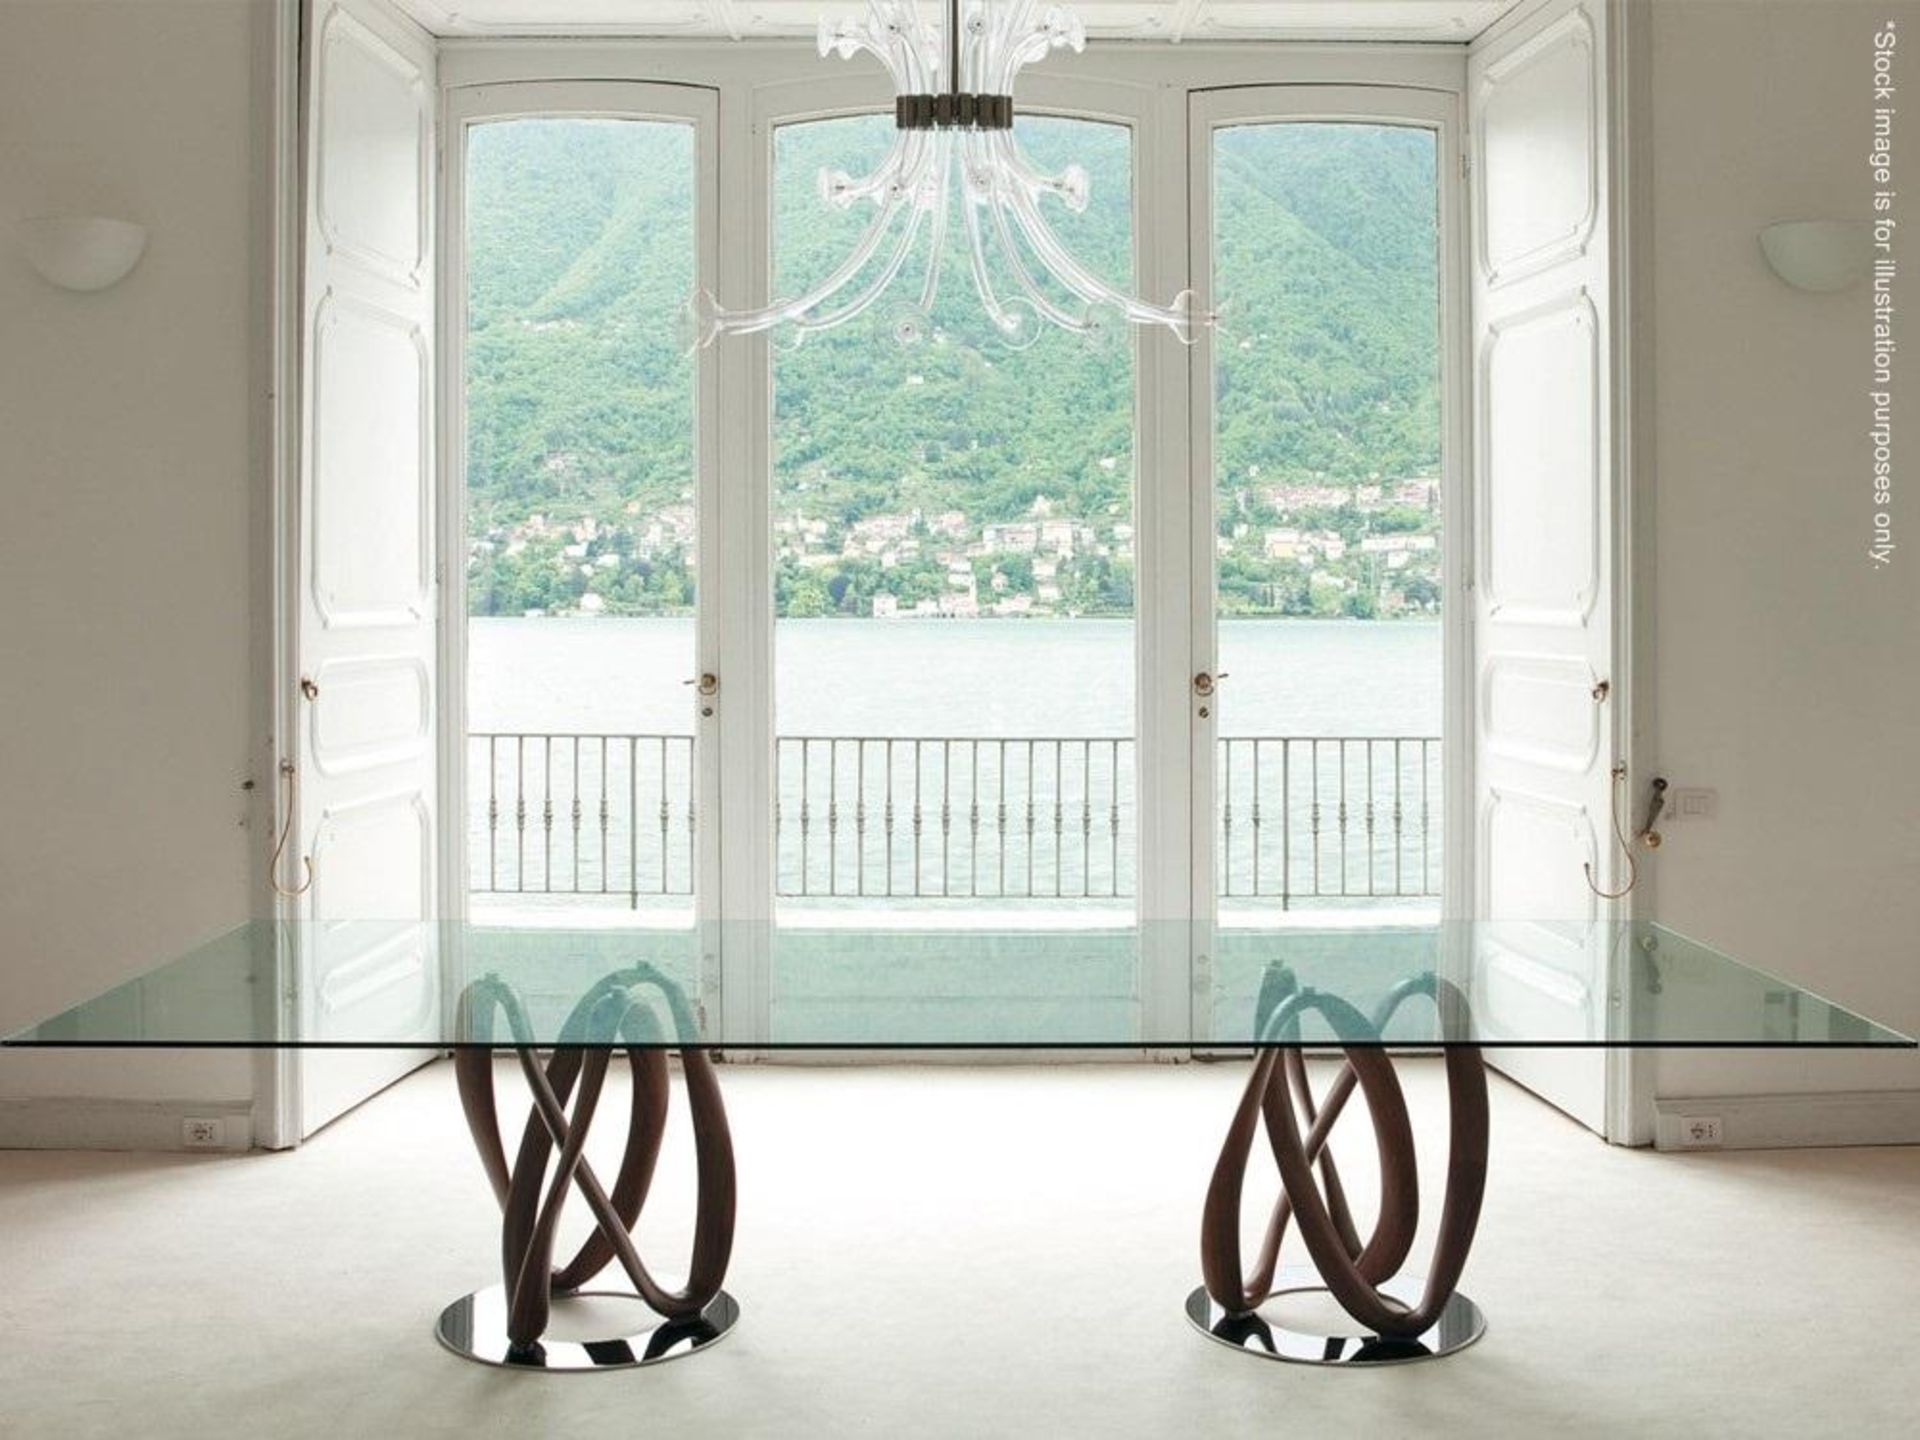 1 x PORADA 'Infinity' Italian Designer Rectangular Glass Topped Dining Table With Distinctive Bases - Bild 2 aus 15